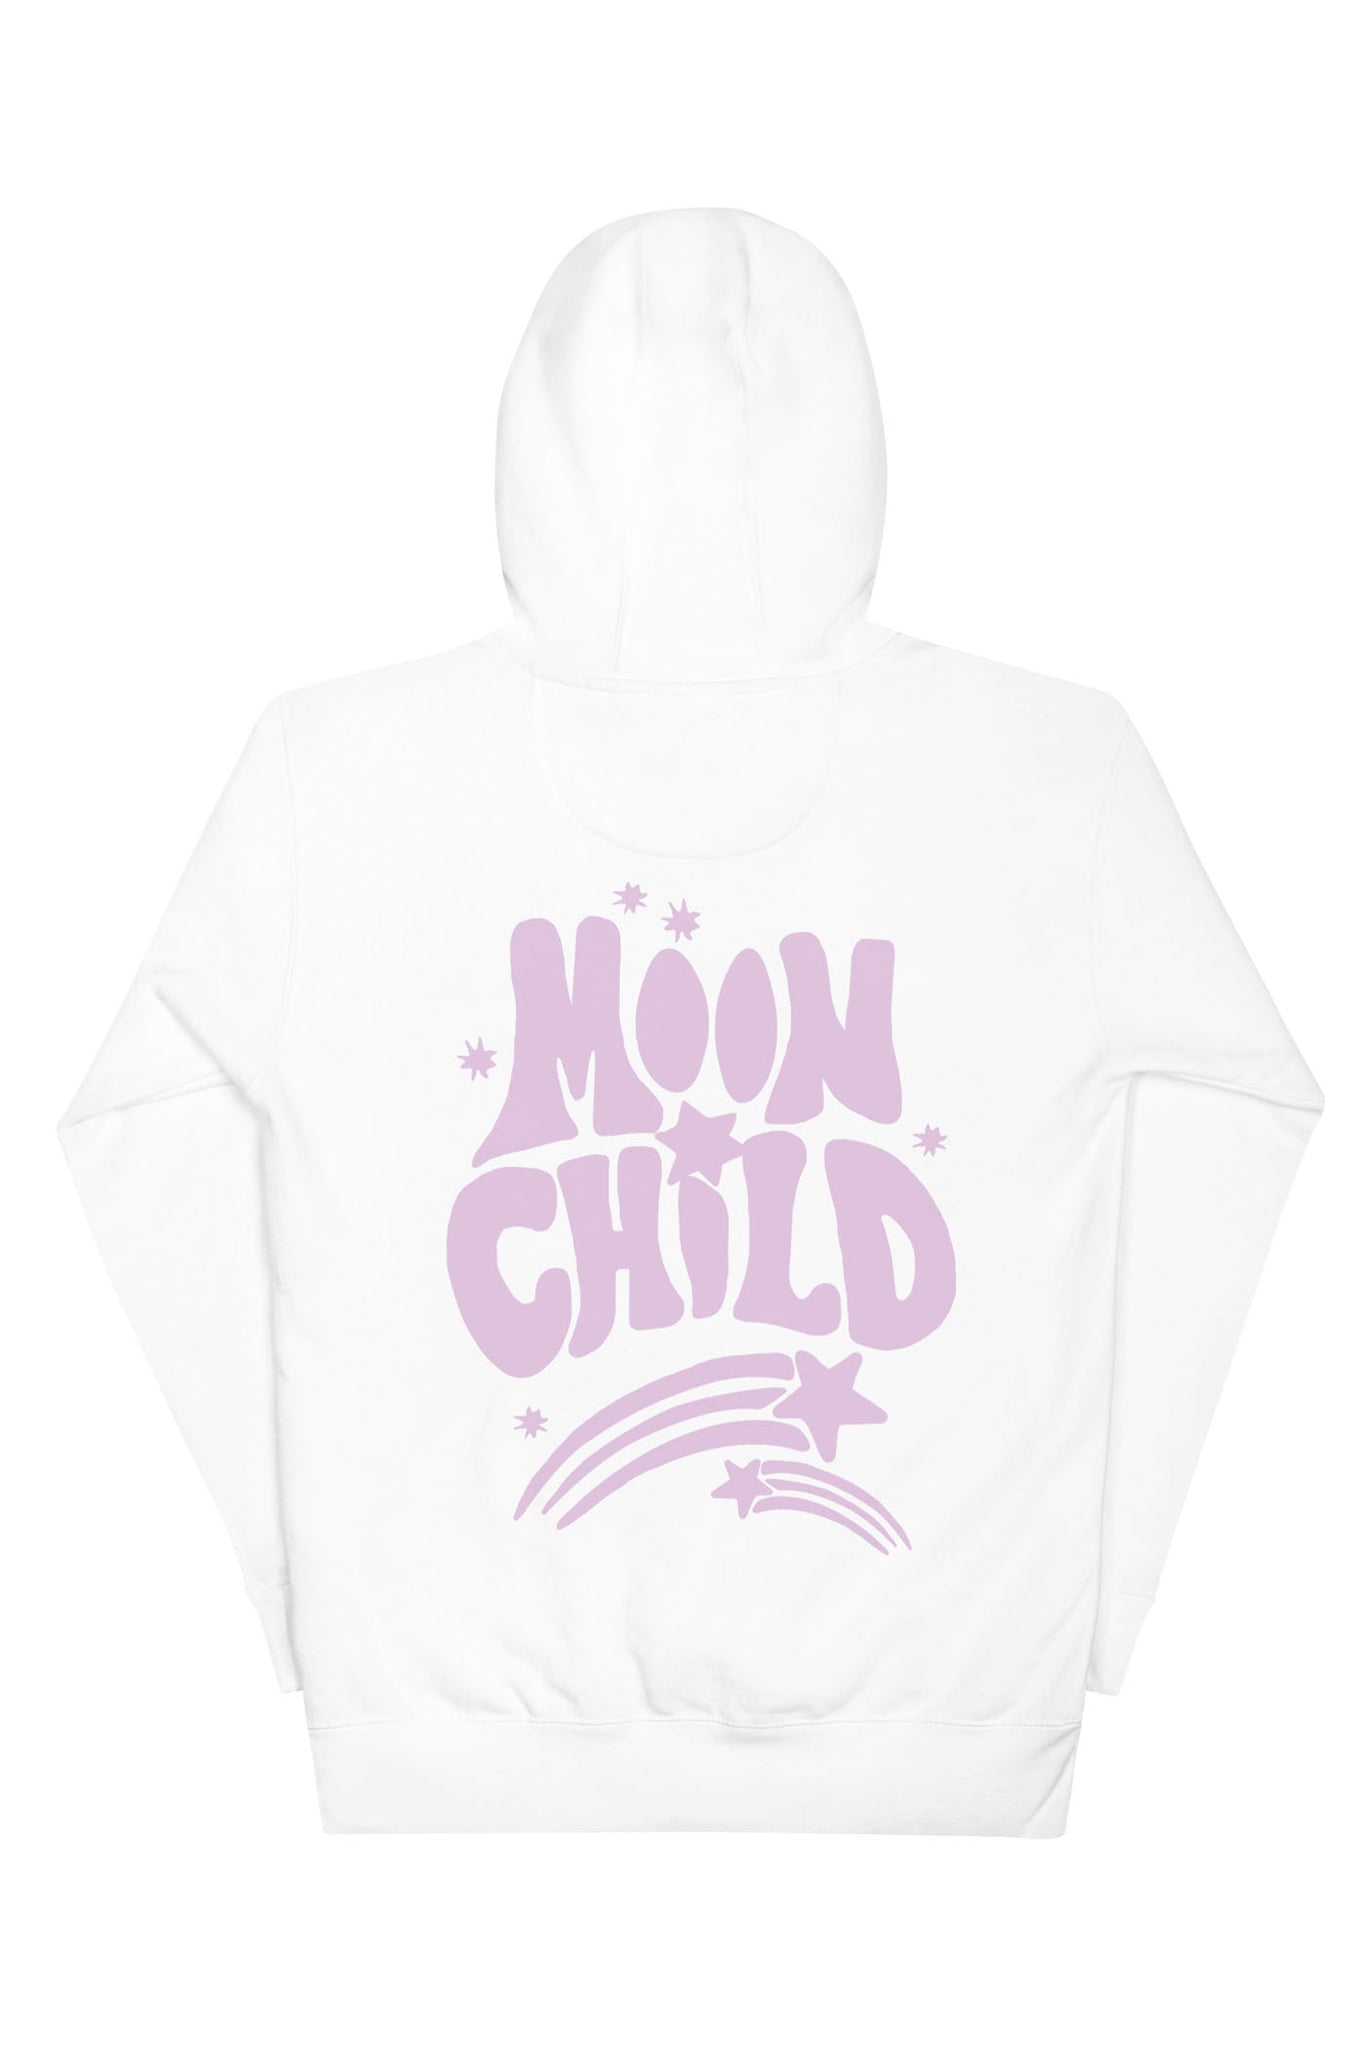 Moon Child ☾ Hoodie